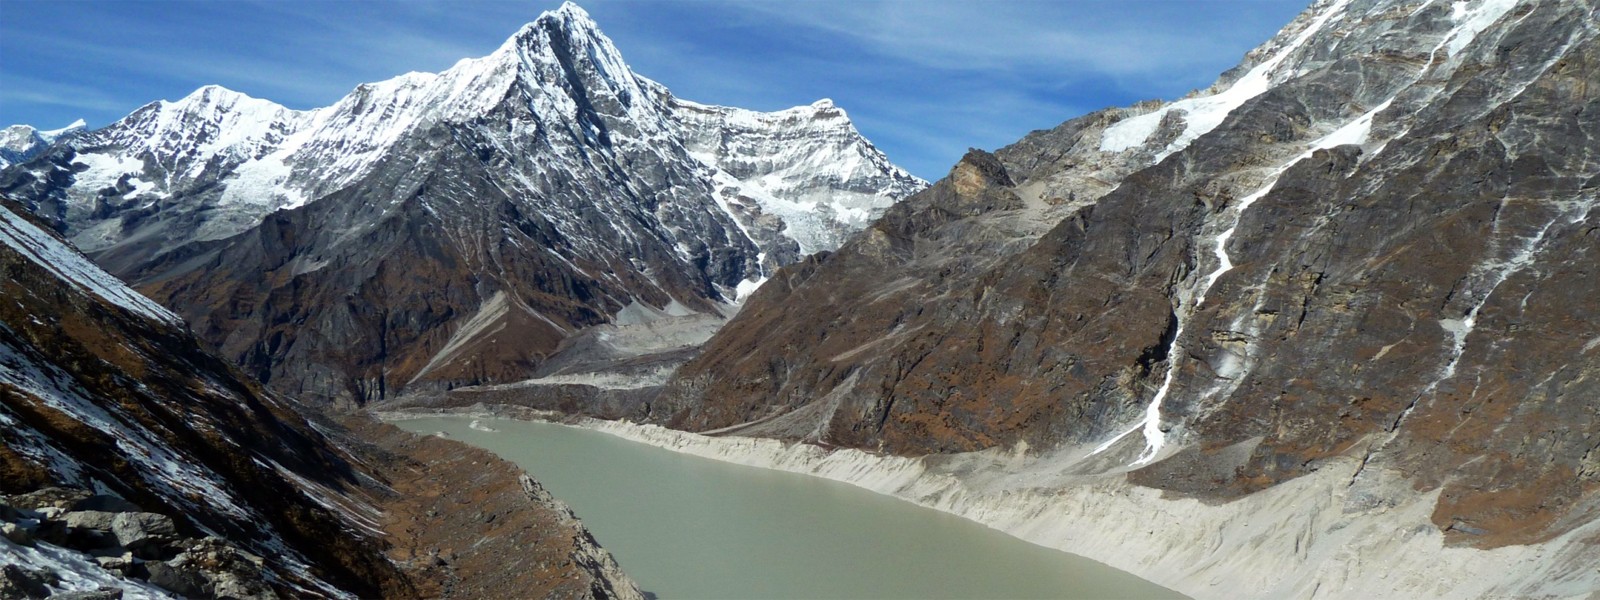 Rolwaling and Tashi Lapcha High Passes Trekking, Nepal